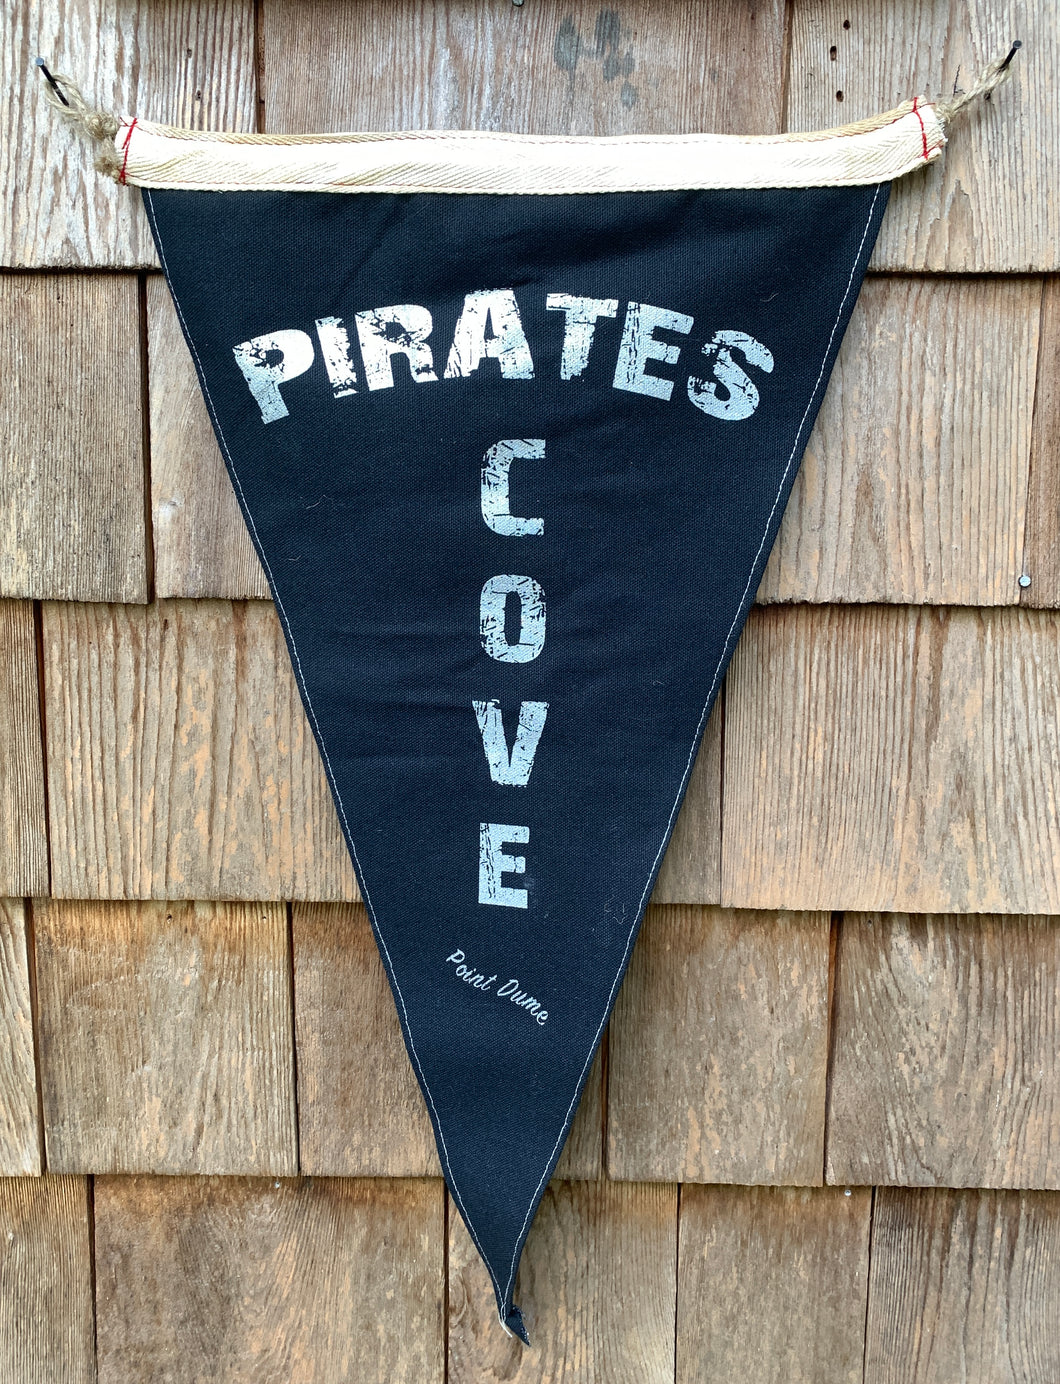 Pirates Cove Pt. Dume -  Surf Flag - Pennant - California